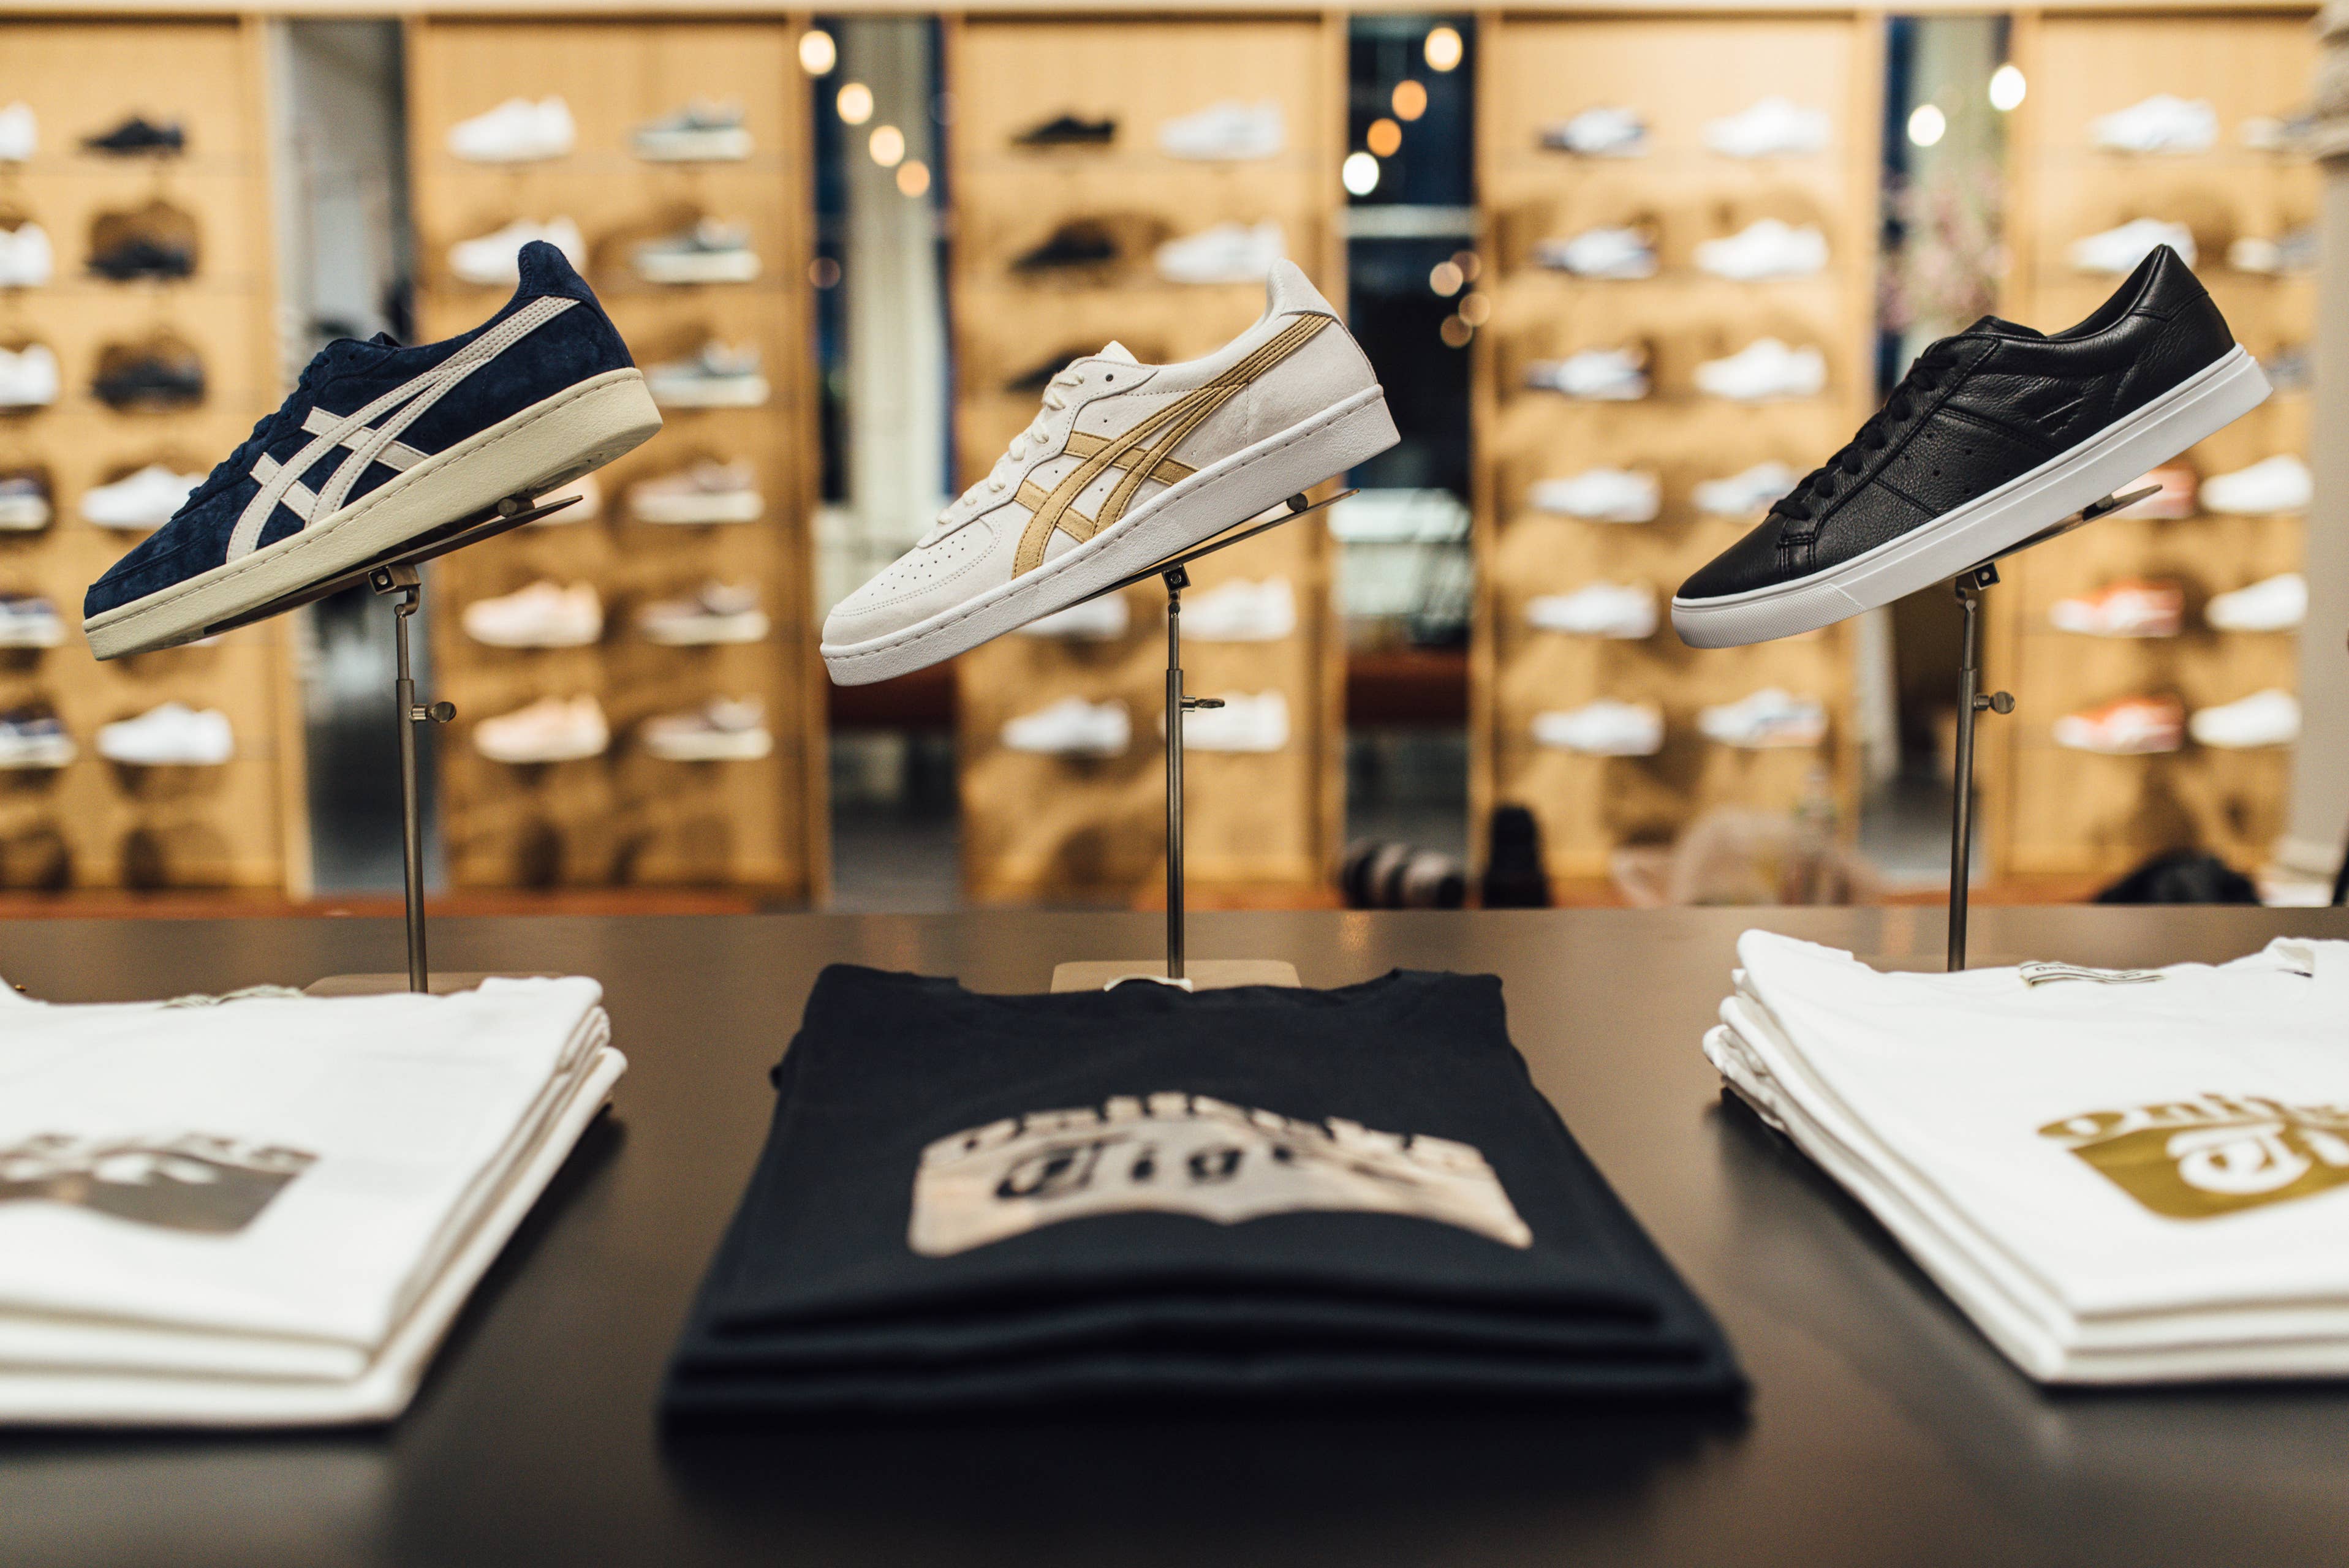 Bape Opens a New Store in New York City's SoHo Neighborhood – Footwear News